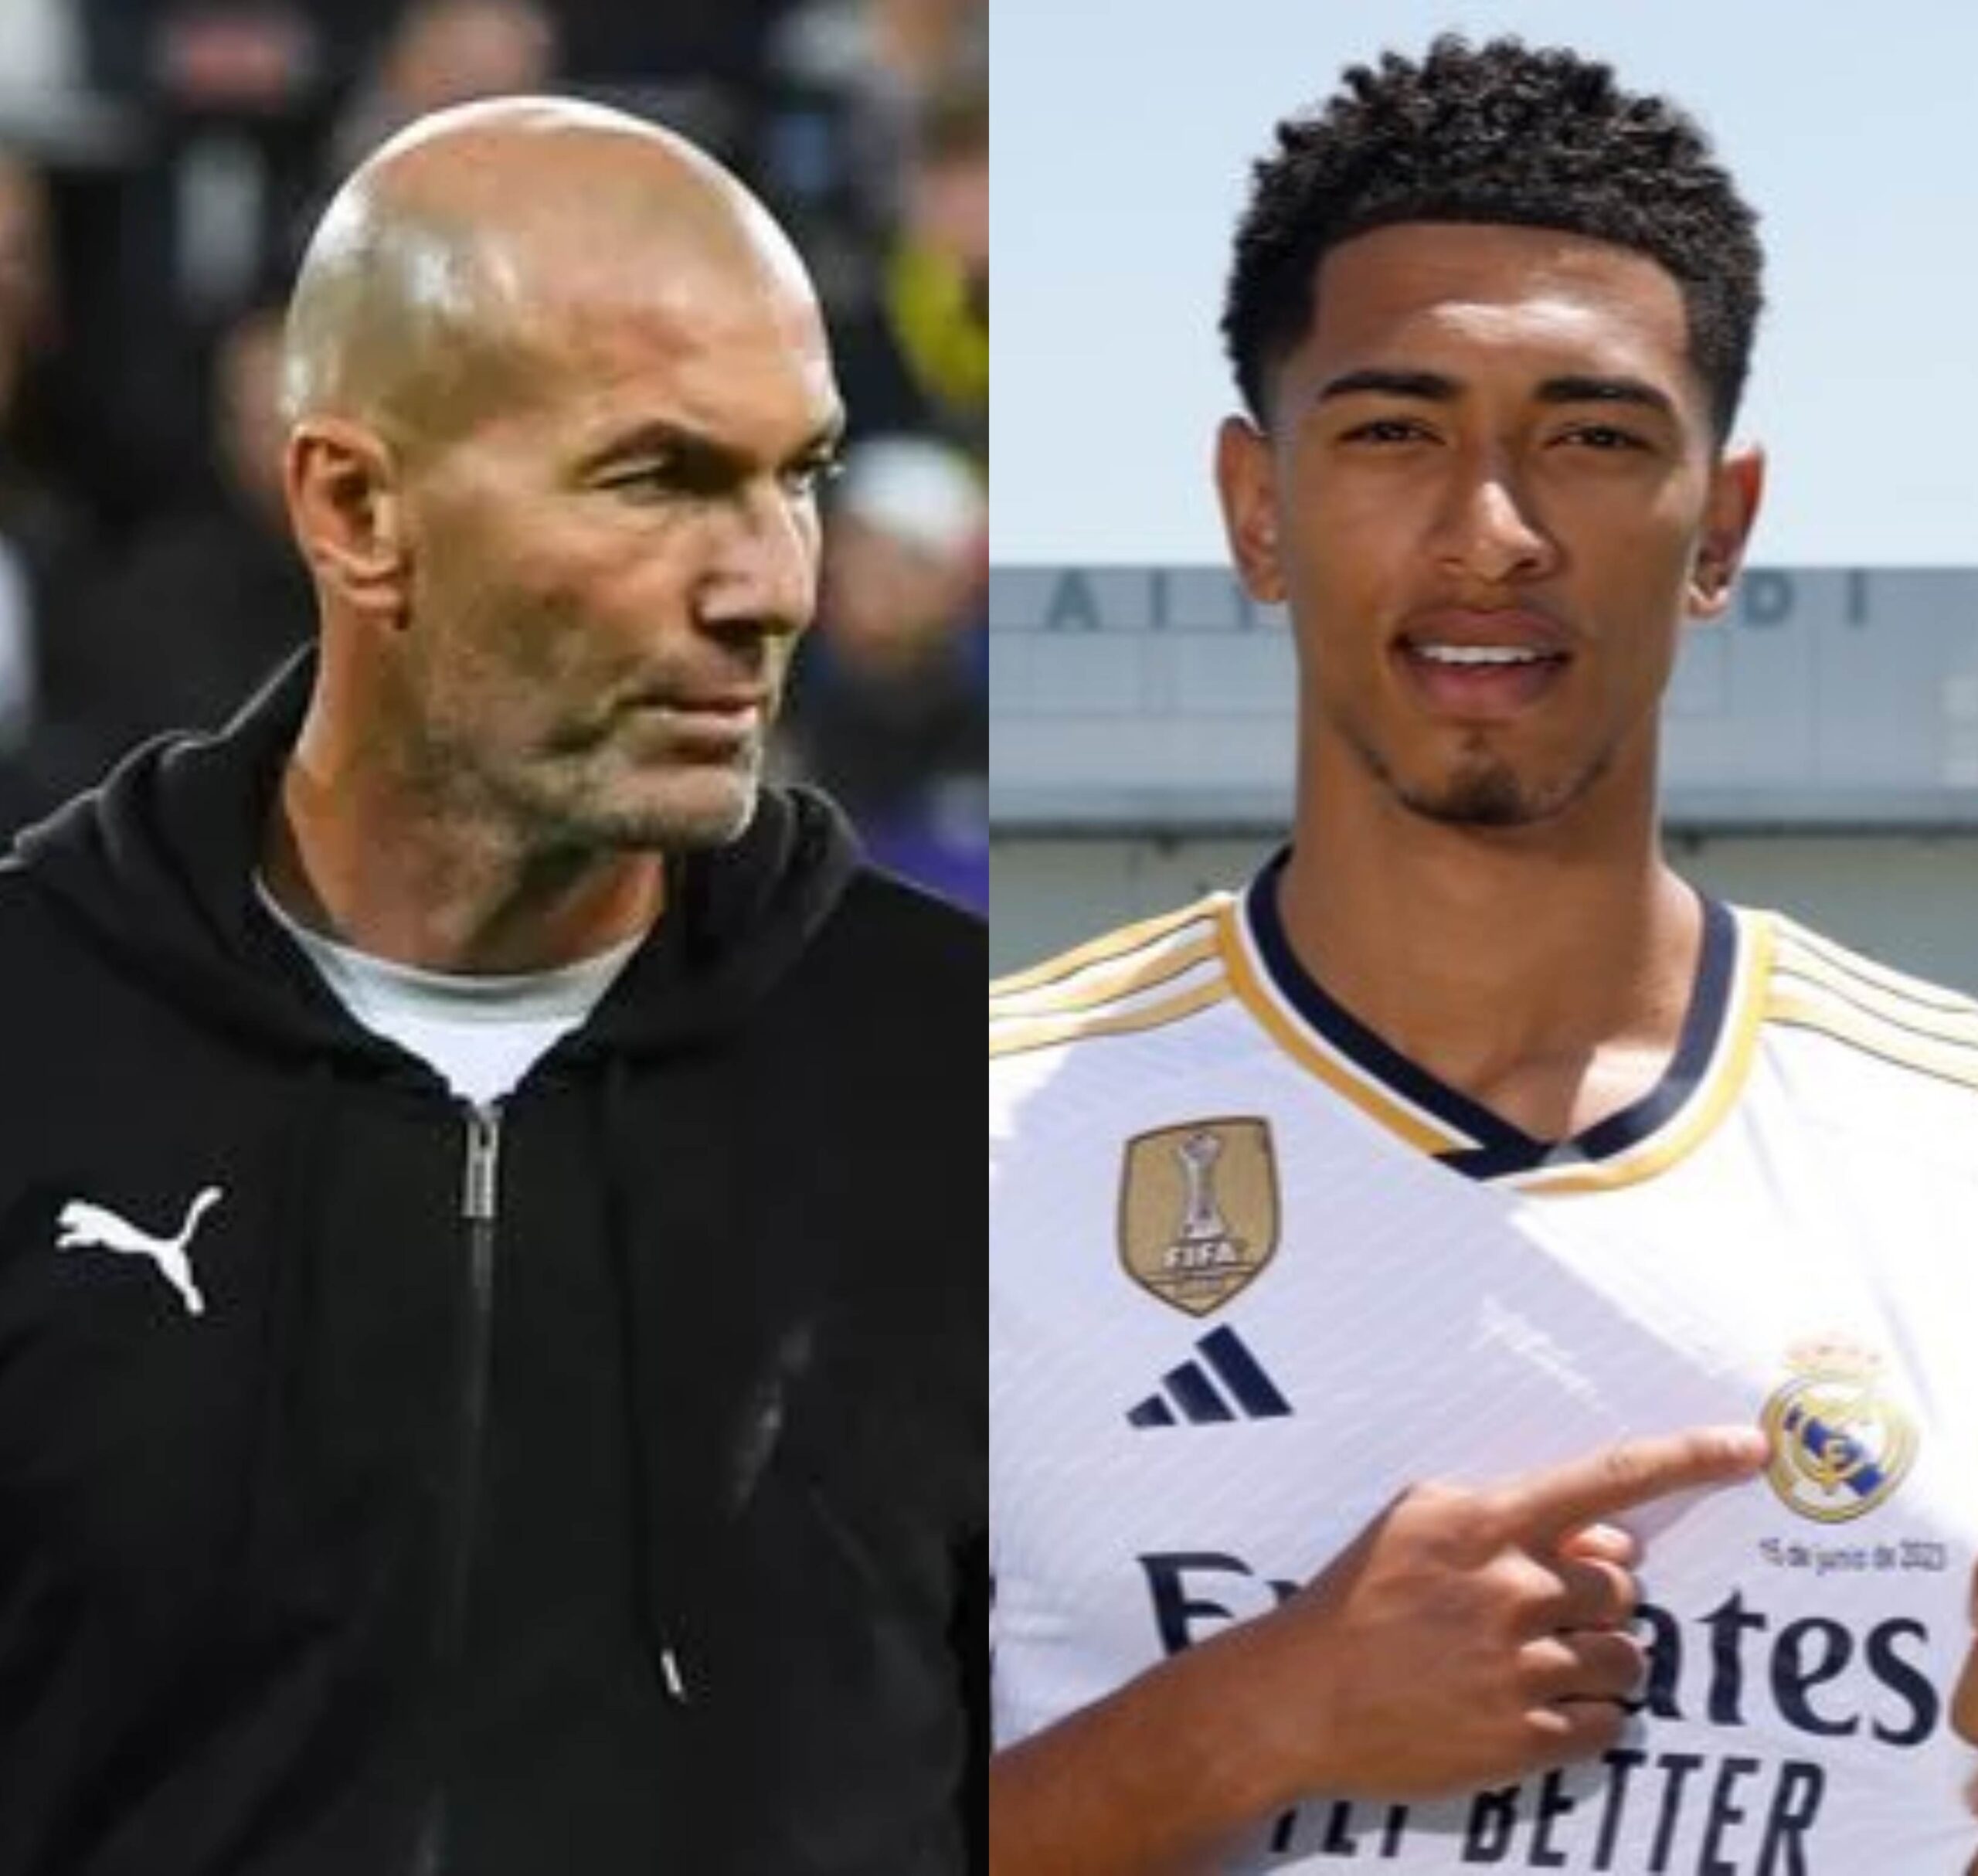 "He reminds me a little bit of Zidane" - Ronaldo Says As He Hails Jude Bellingham